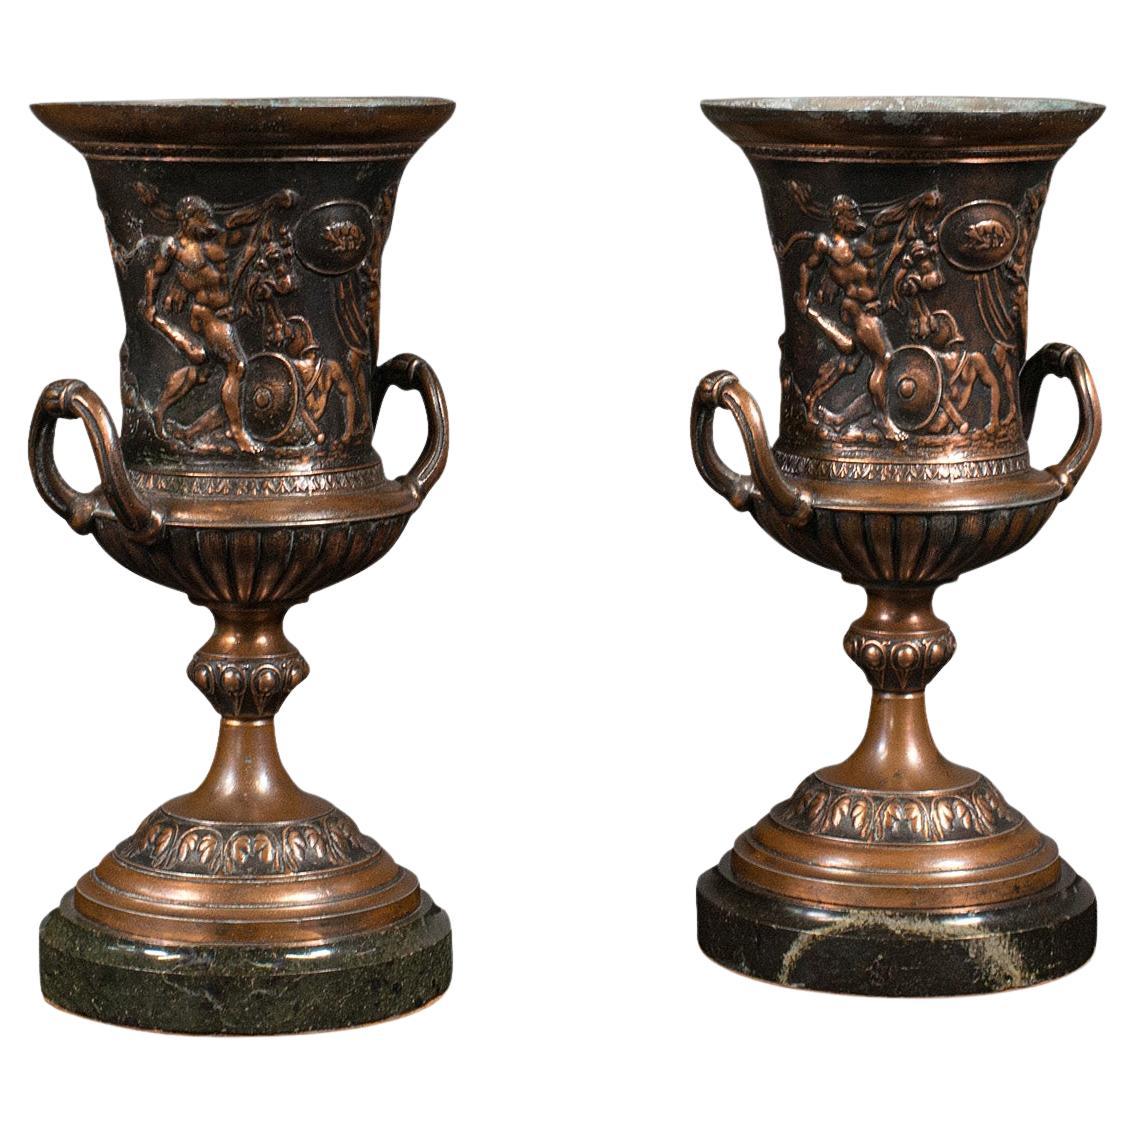 Paar antike Grand Tour-Urnen, Italienisch, dekorative Vase, römisch, viktorianisch, viktorianisch